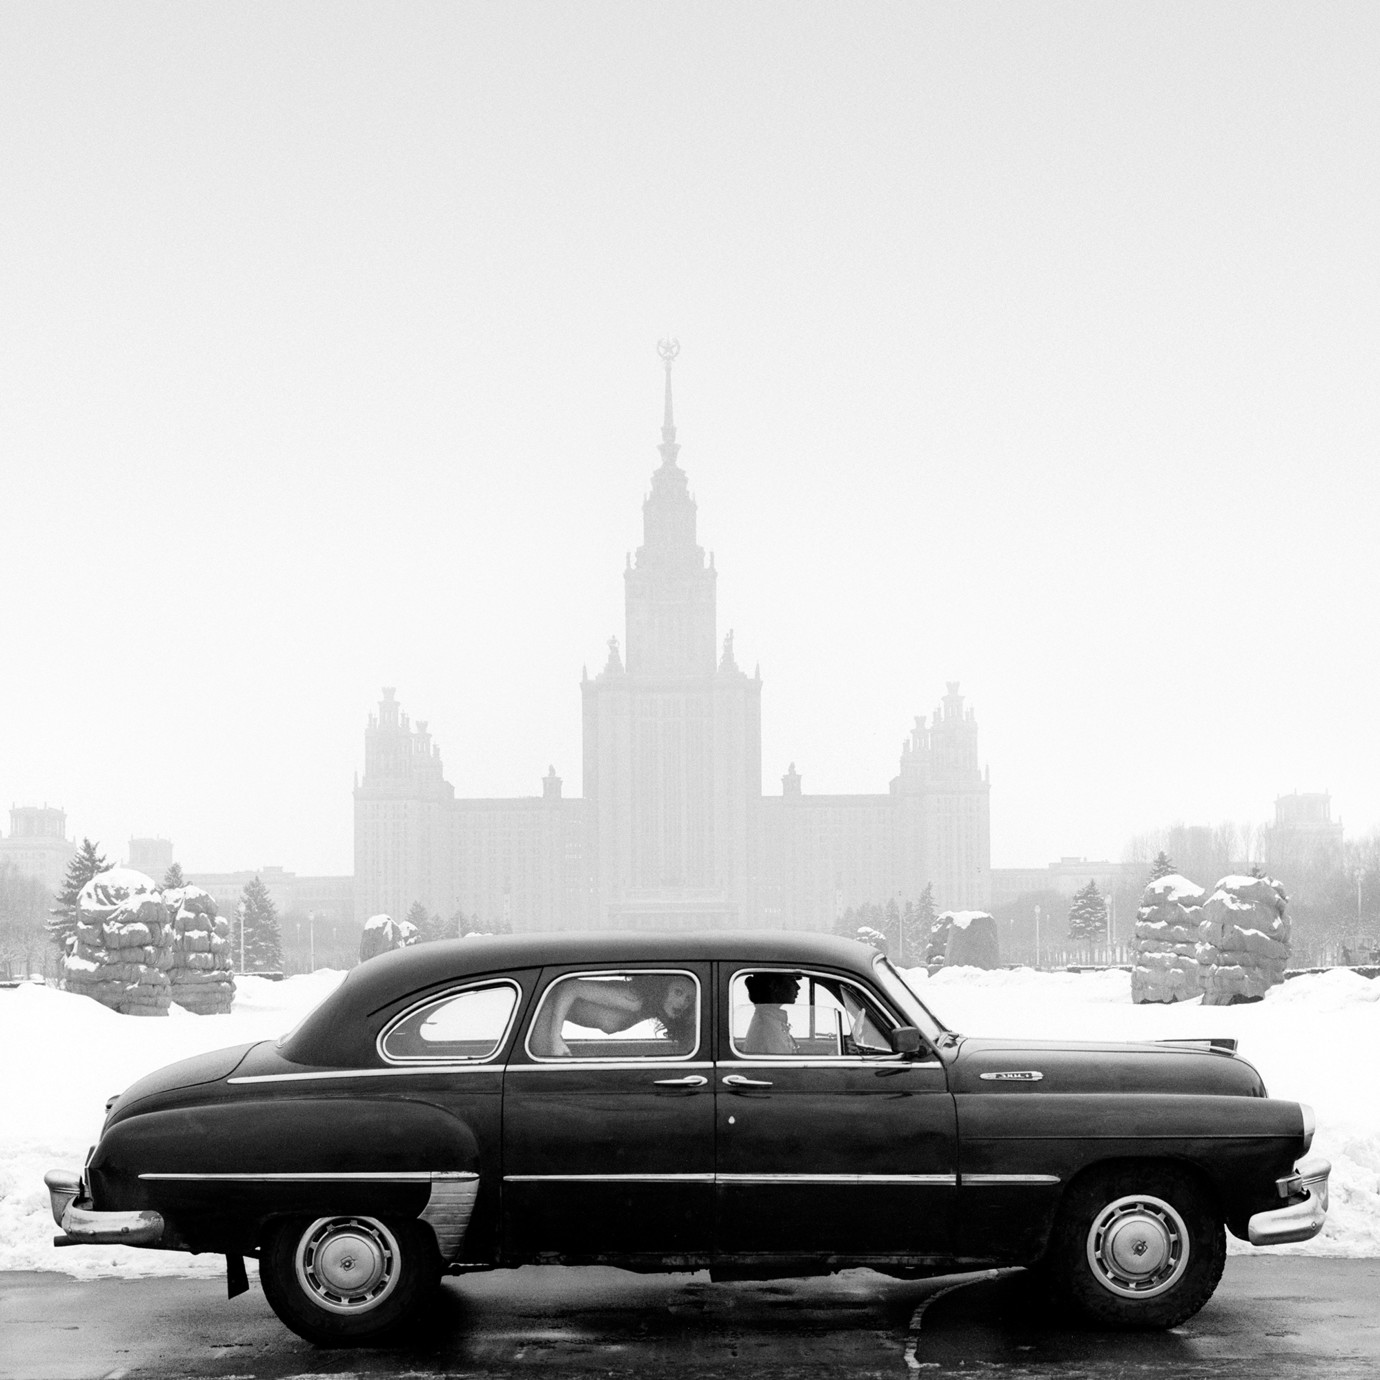 1380x1380, 267 Kb / ГАЗ-12, ч/б, МГУ, Москва, автомобиль, классика, ретро, снег